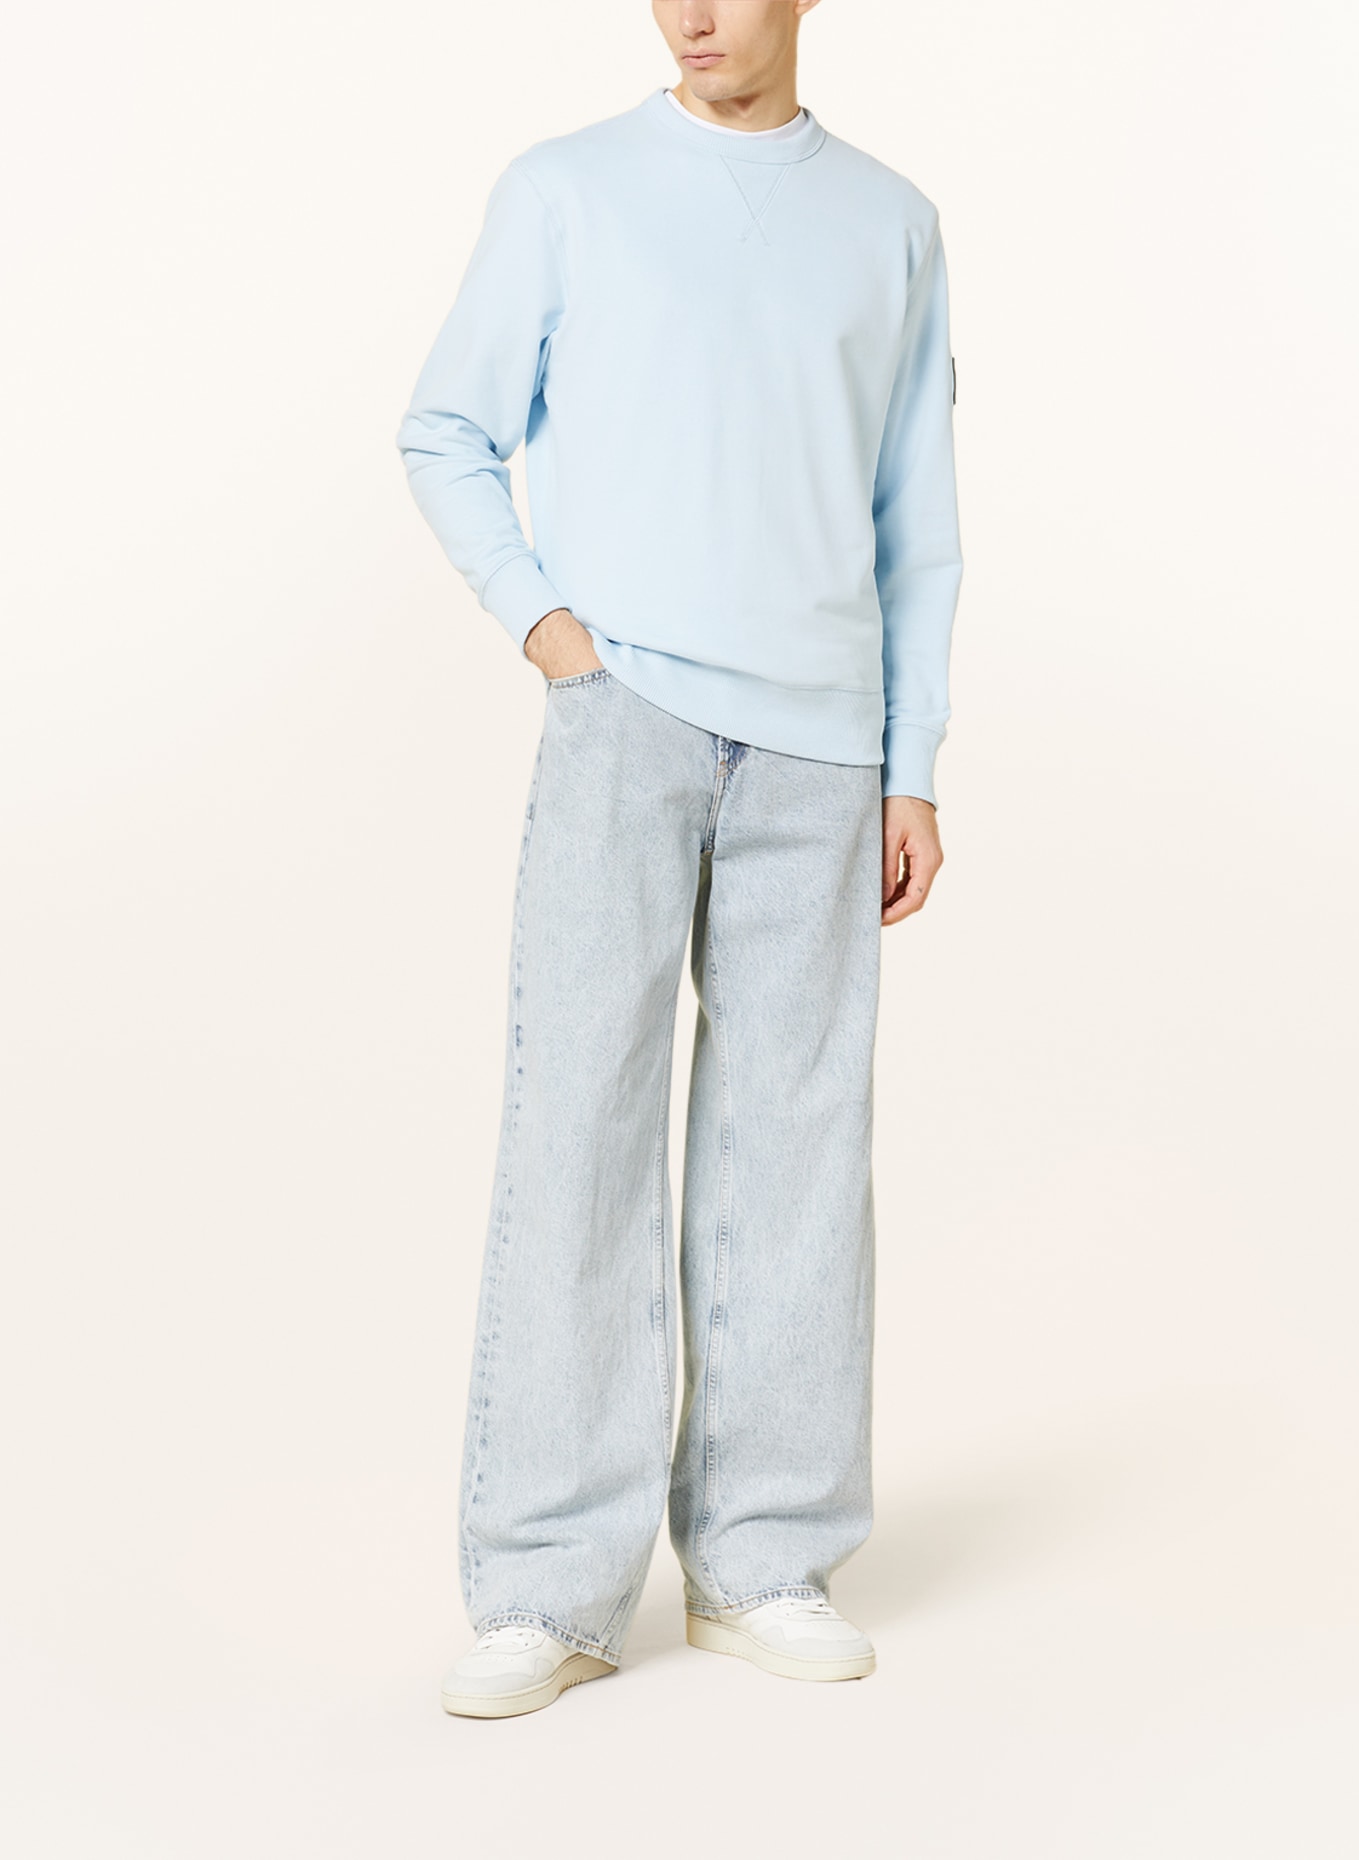 Calvin Klein Jeans Sweatshirt in light blue